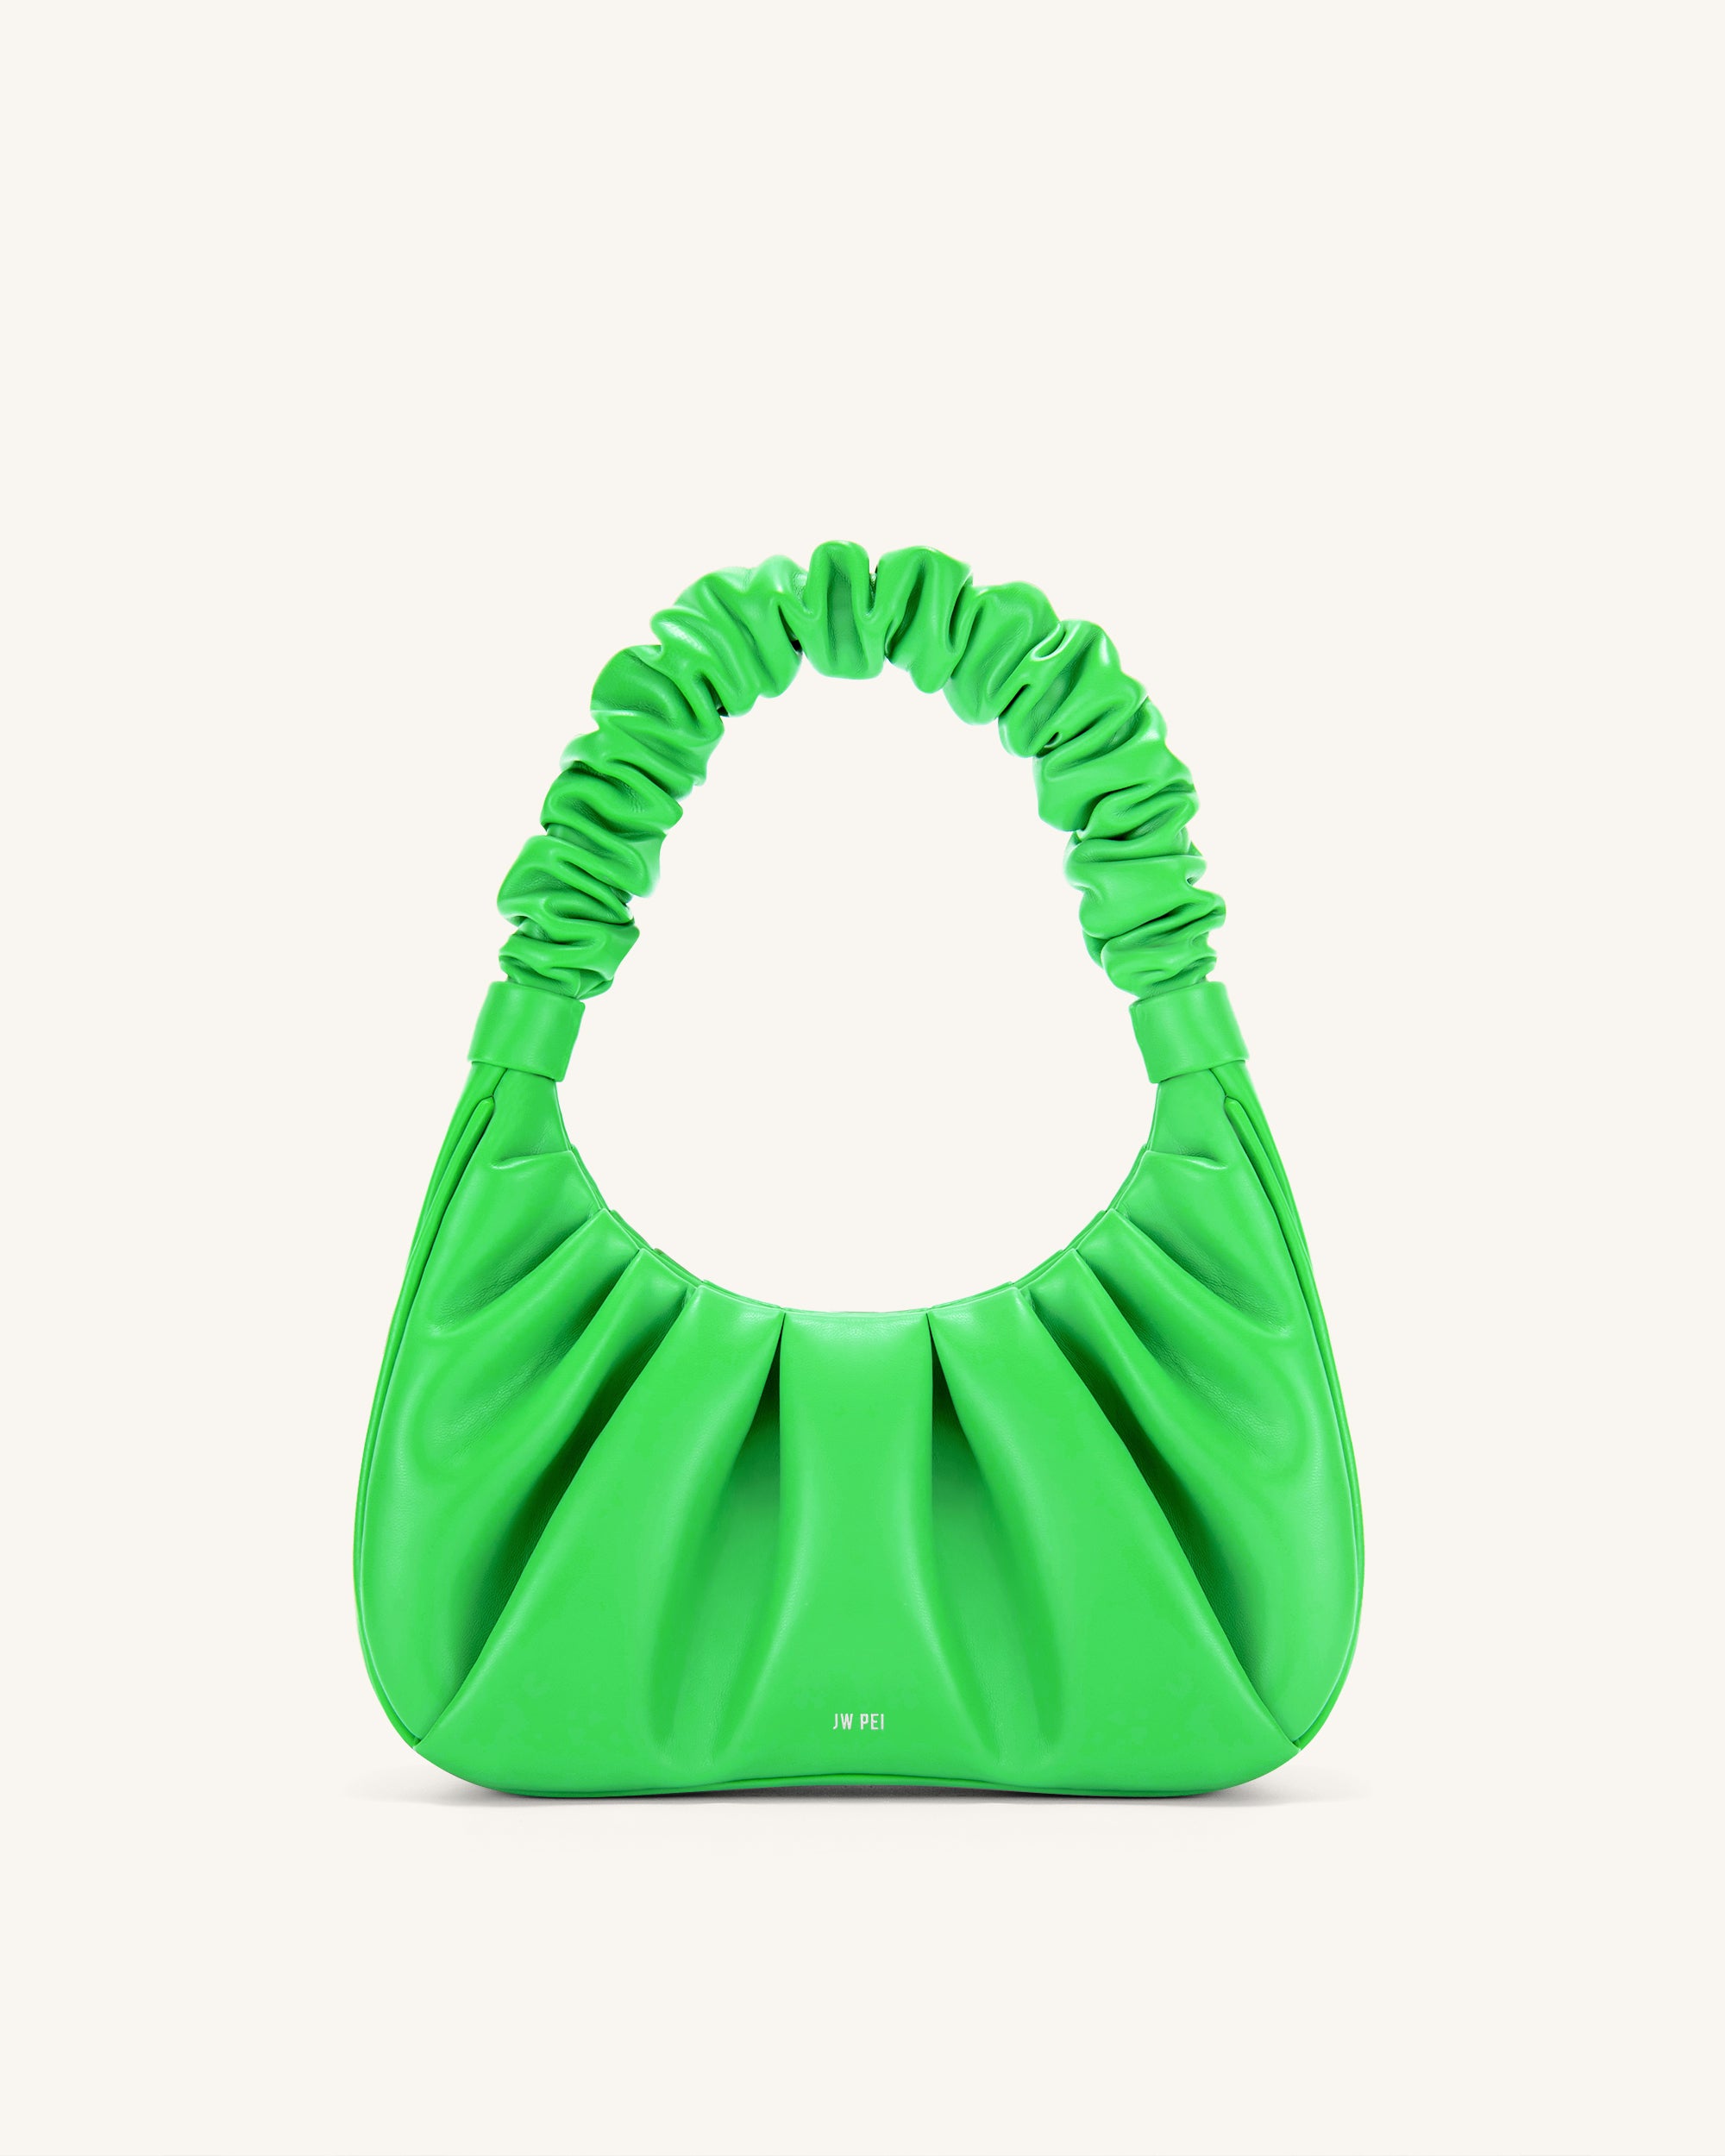 Gabbi Ruched Hobo Handbag - Neon Green Online Shopping - JW Pei